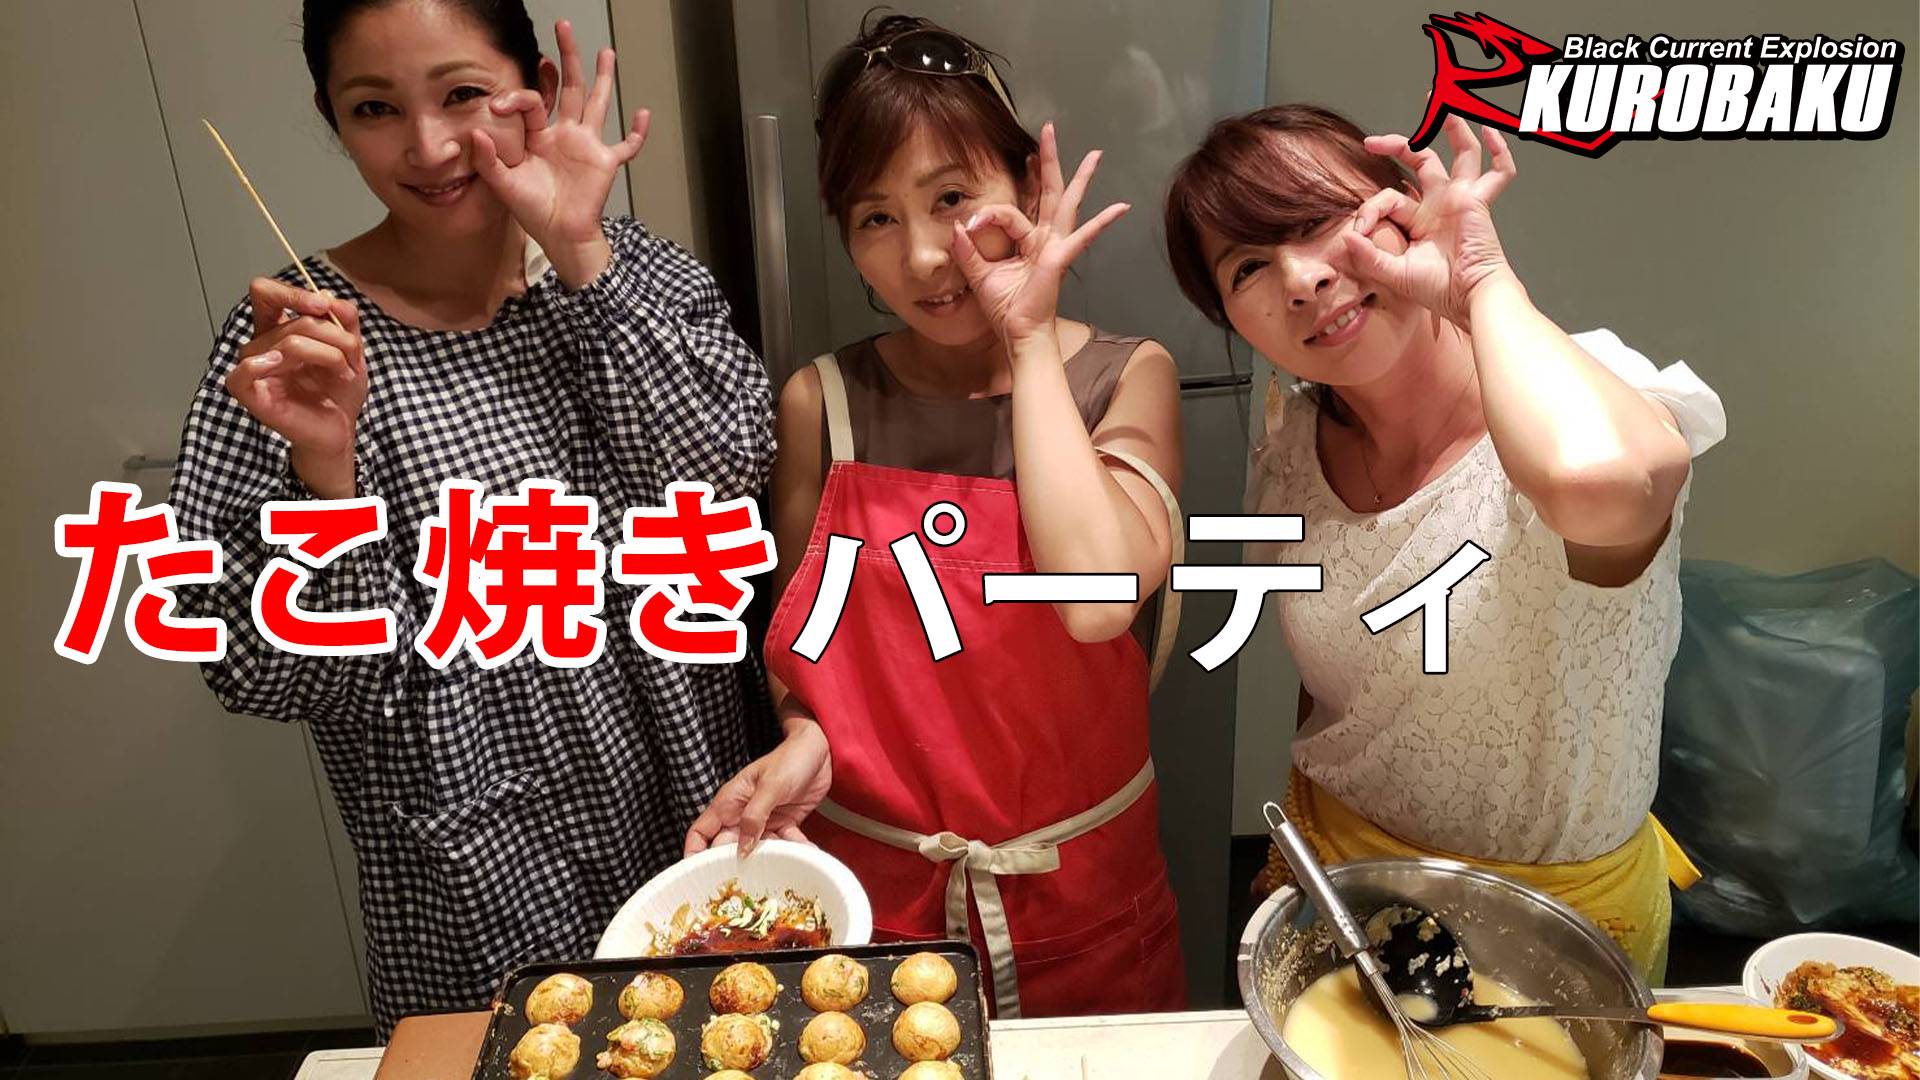 KUROBAKUタコ焼きパーティーのサムネイル